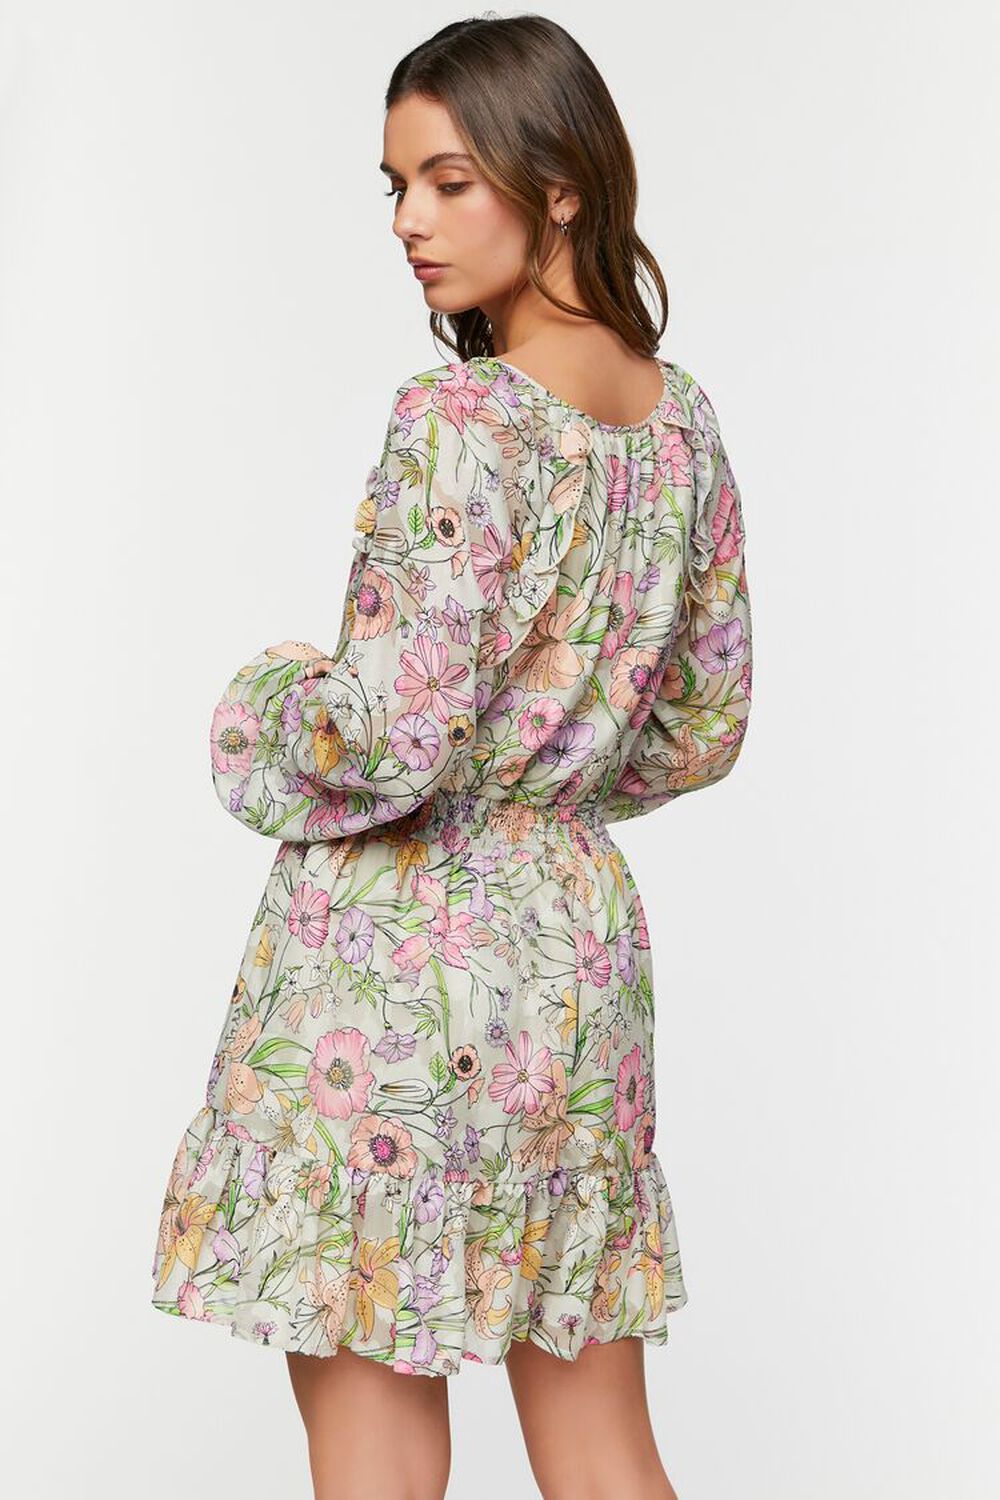 BEIGE/MULTI Floral Print Smocked Mini Dress, image 3